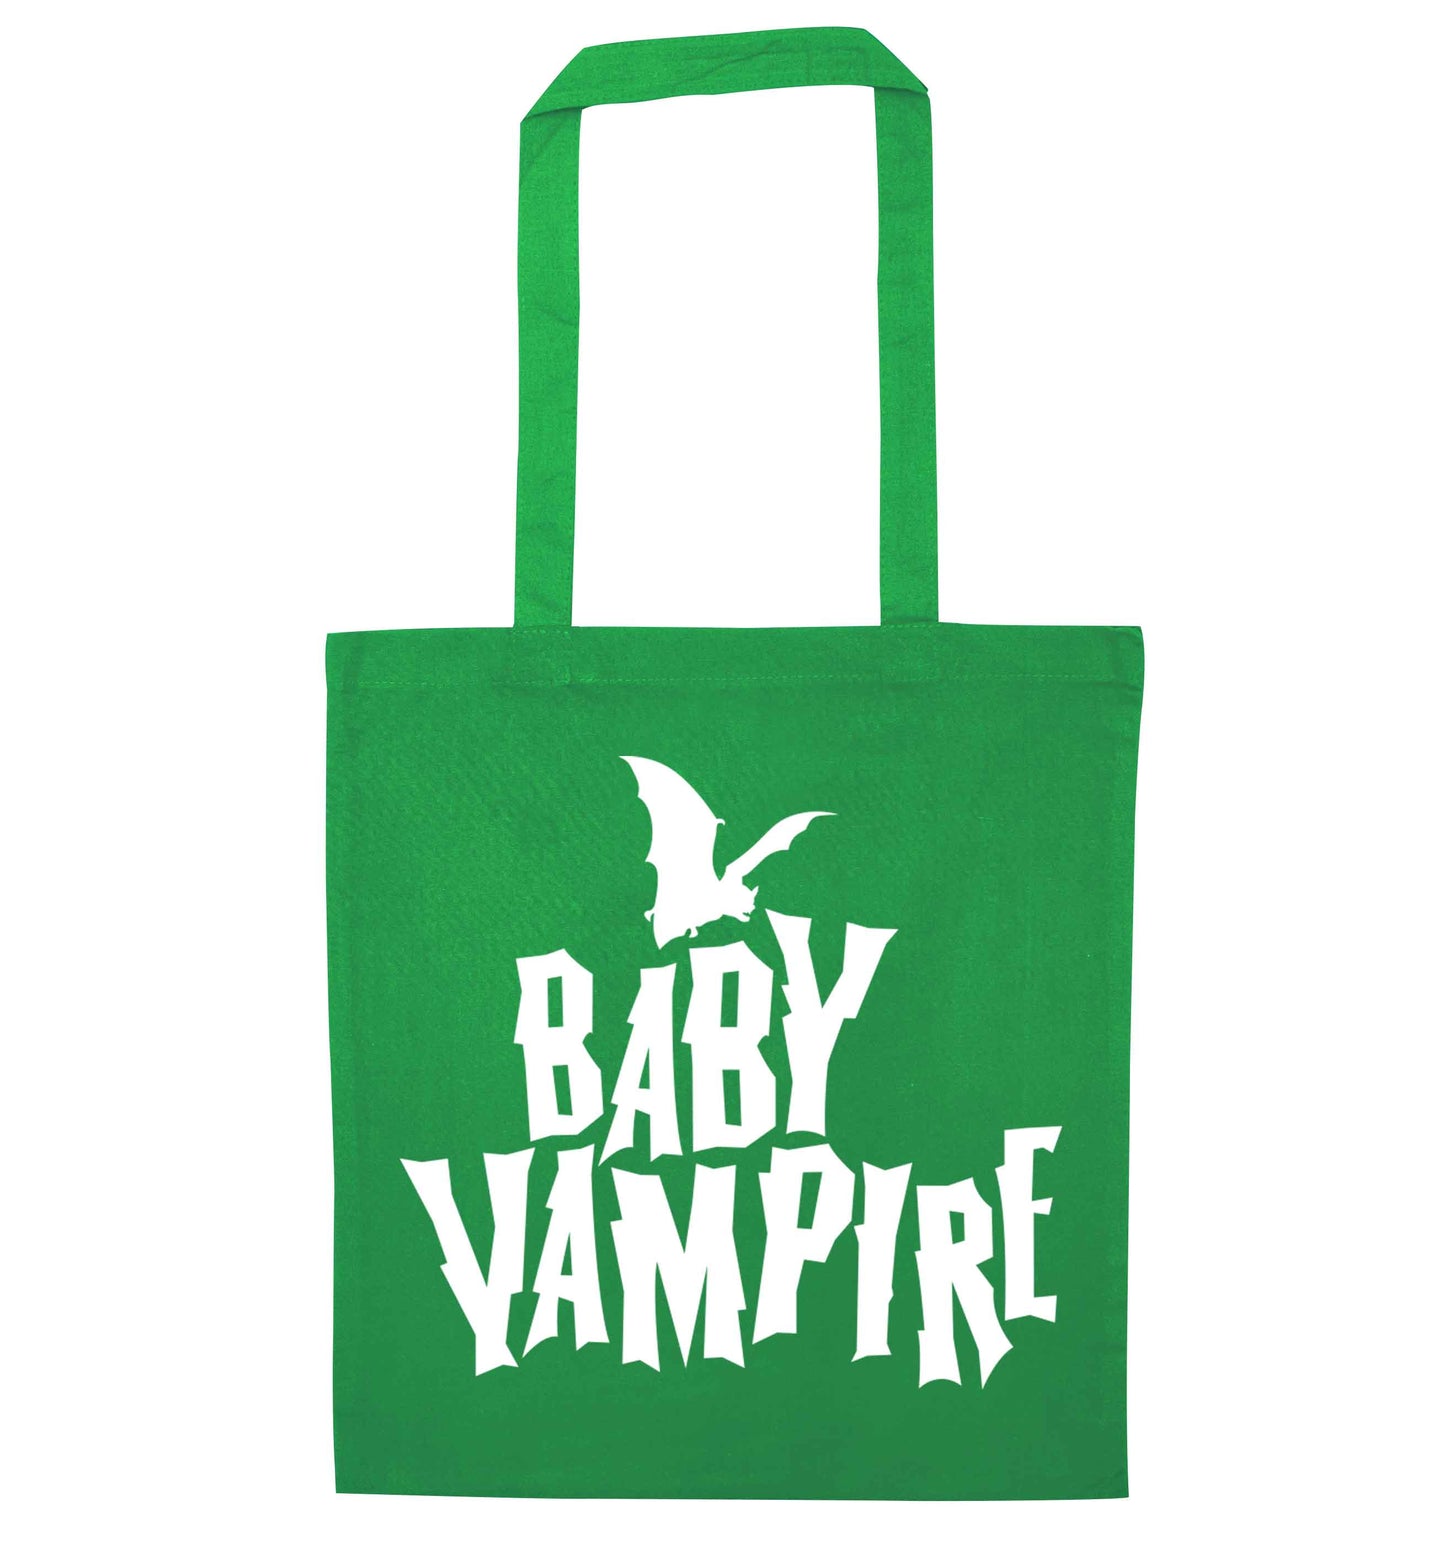 Baby vampire green tote bag